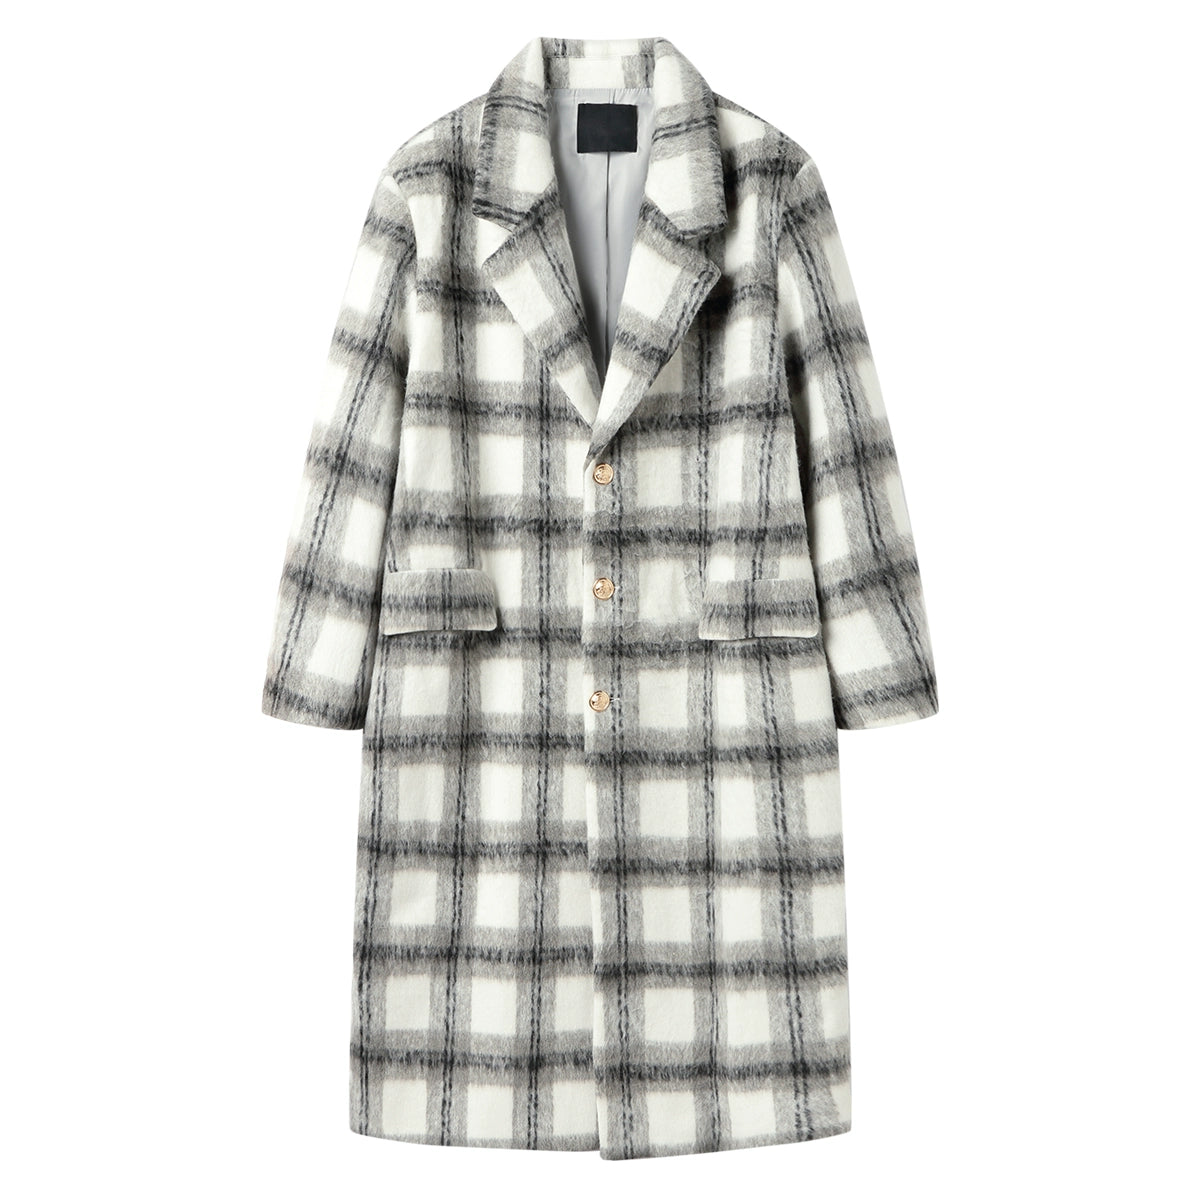 BAKUCO Korean style over-the-knee mid-length plaid woolen coat casual warm tweed jacket